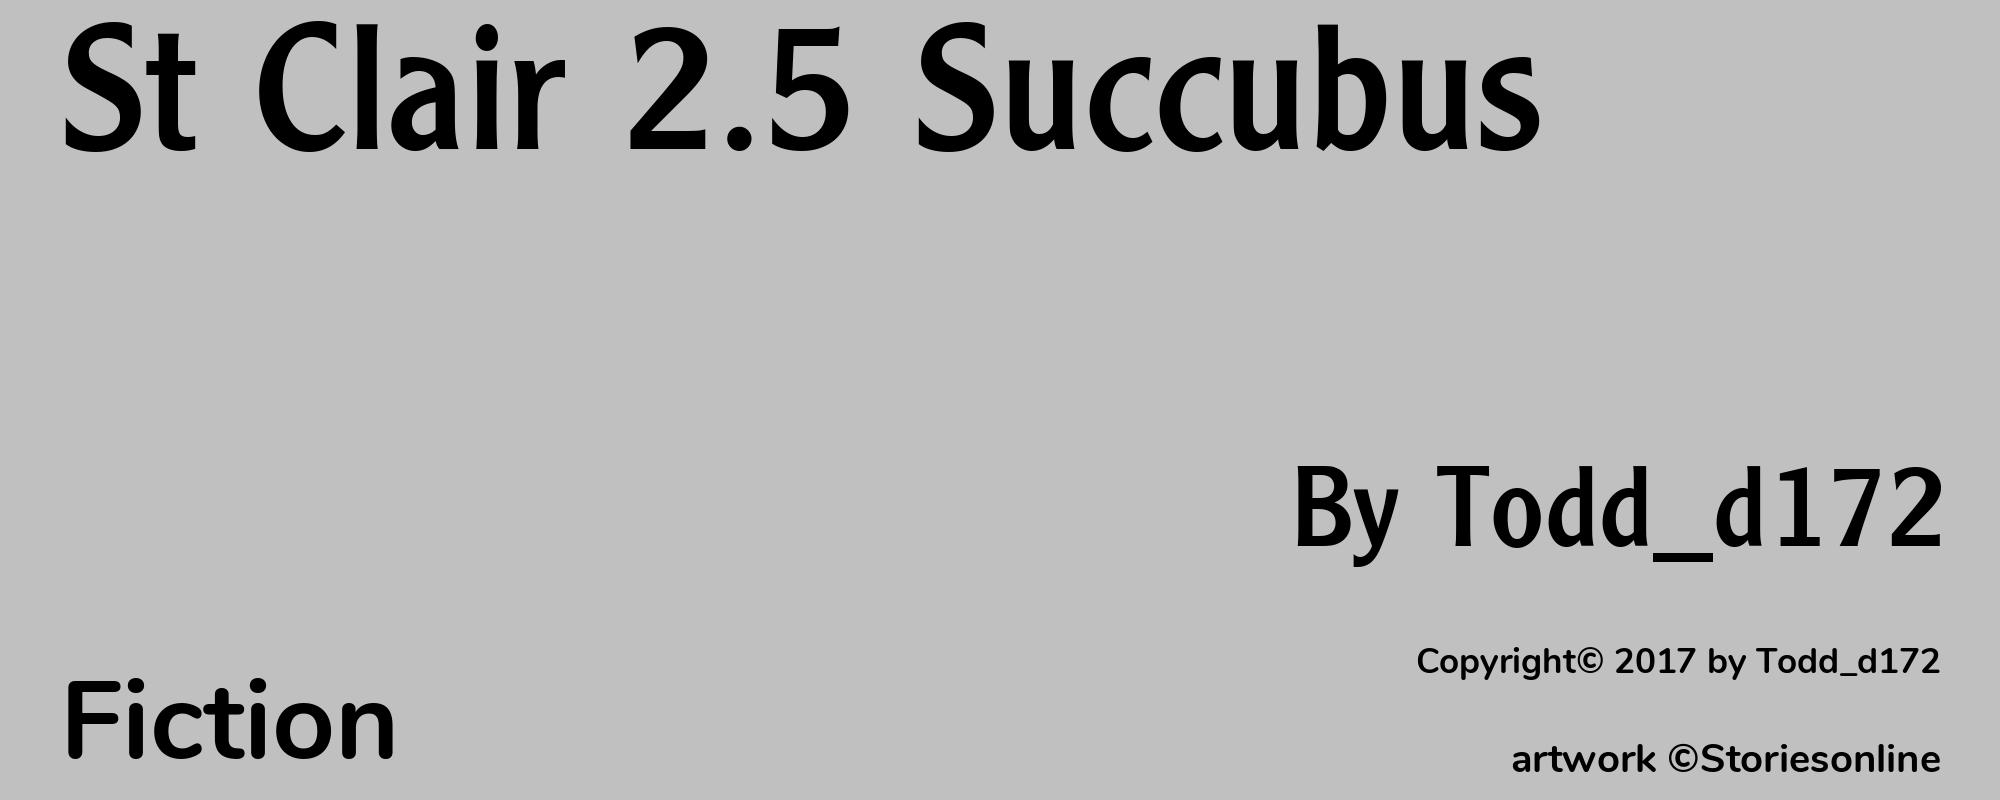 St Clair 2.5 Succubus - Cover